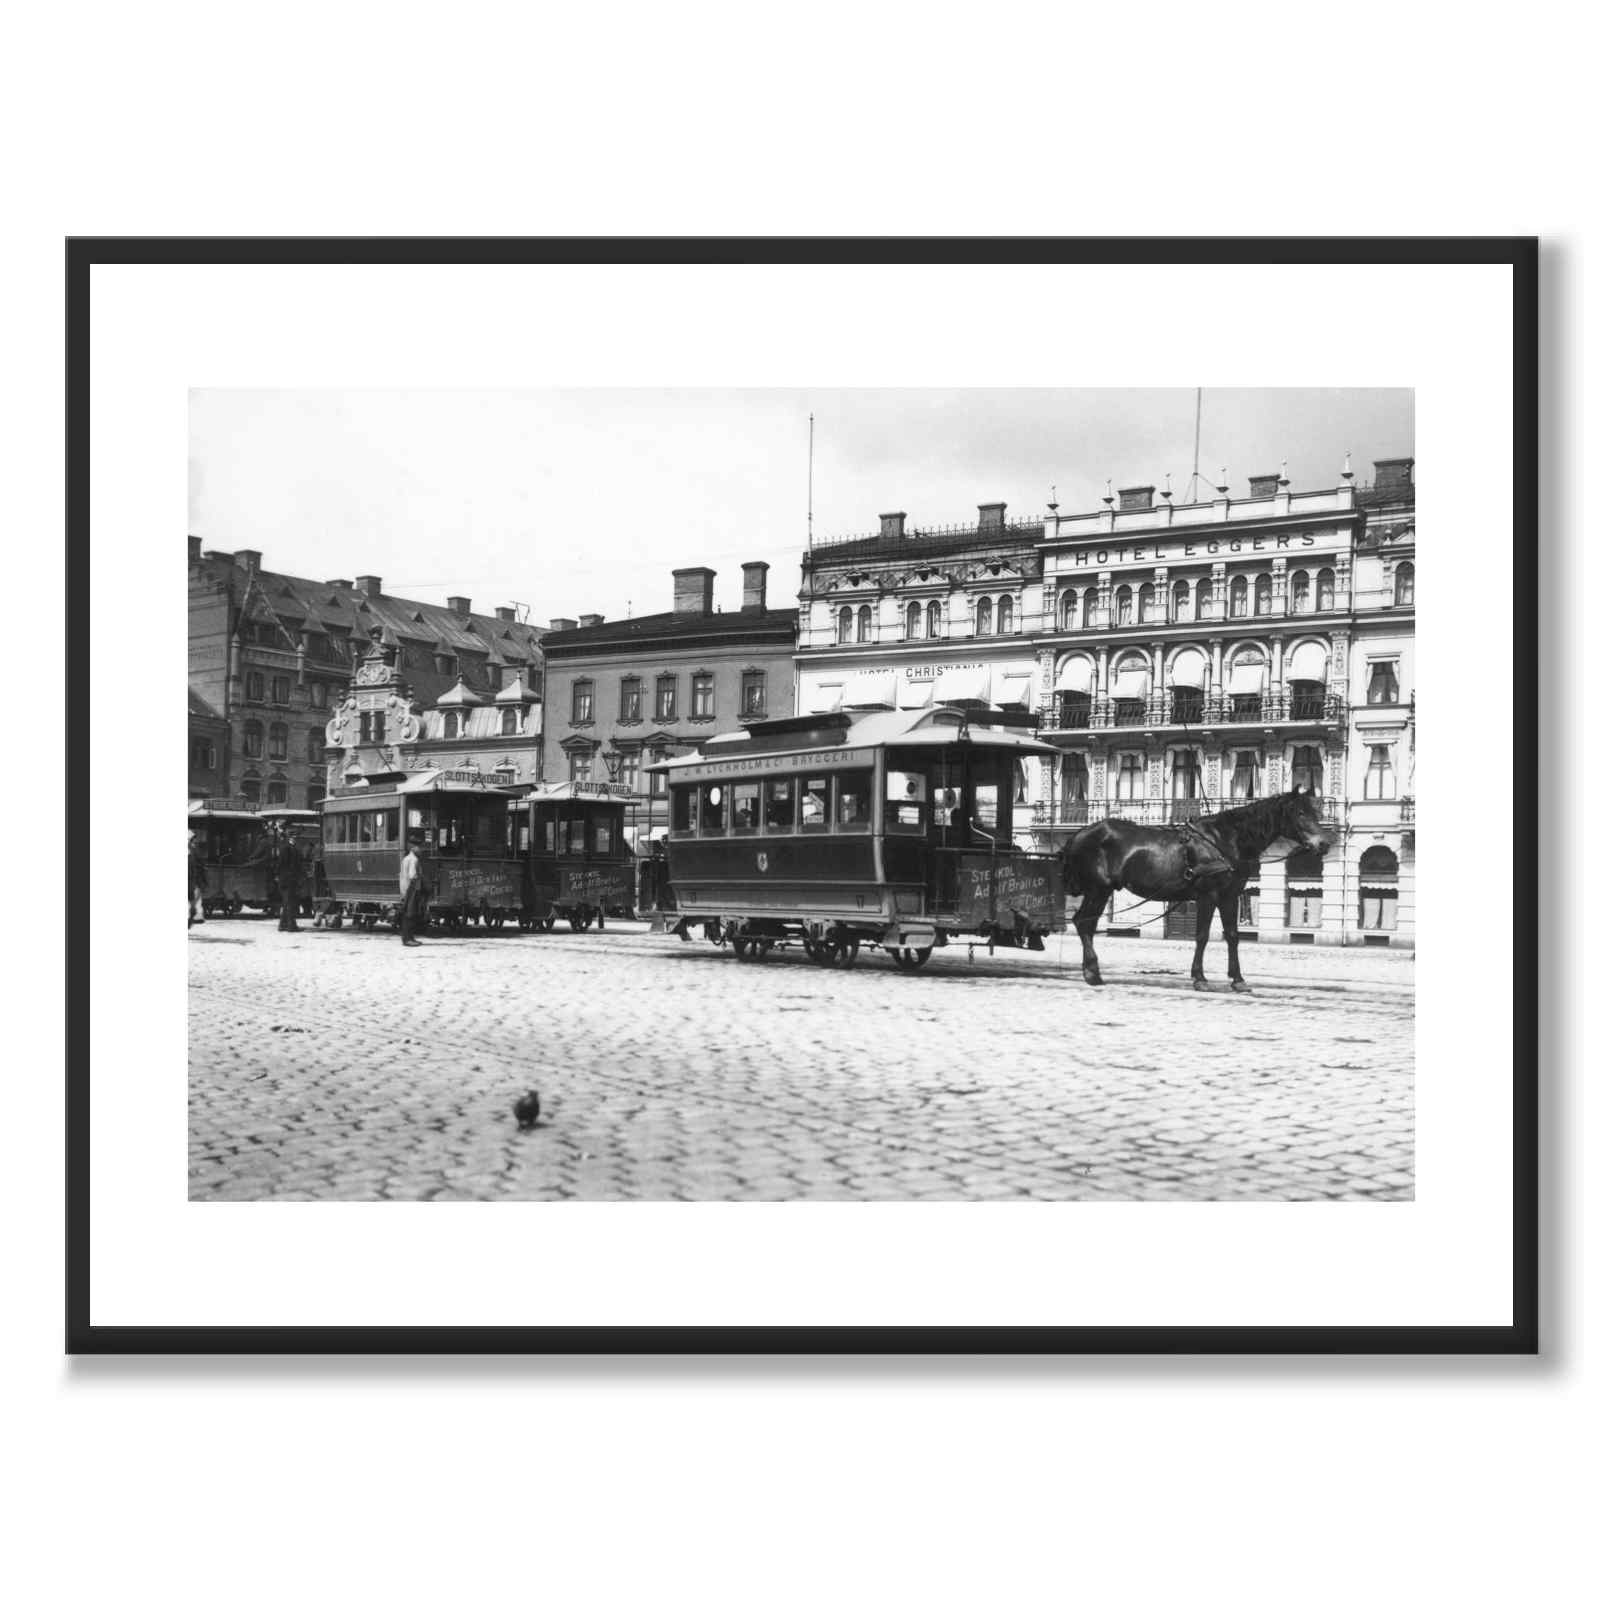 Hotell Eggers 1900